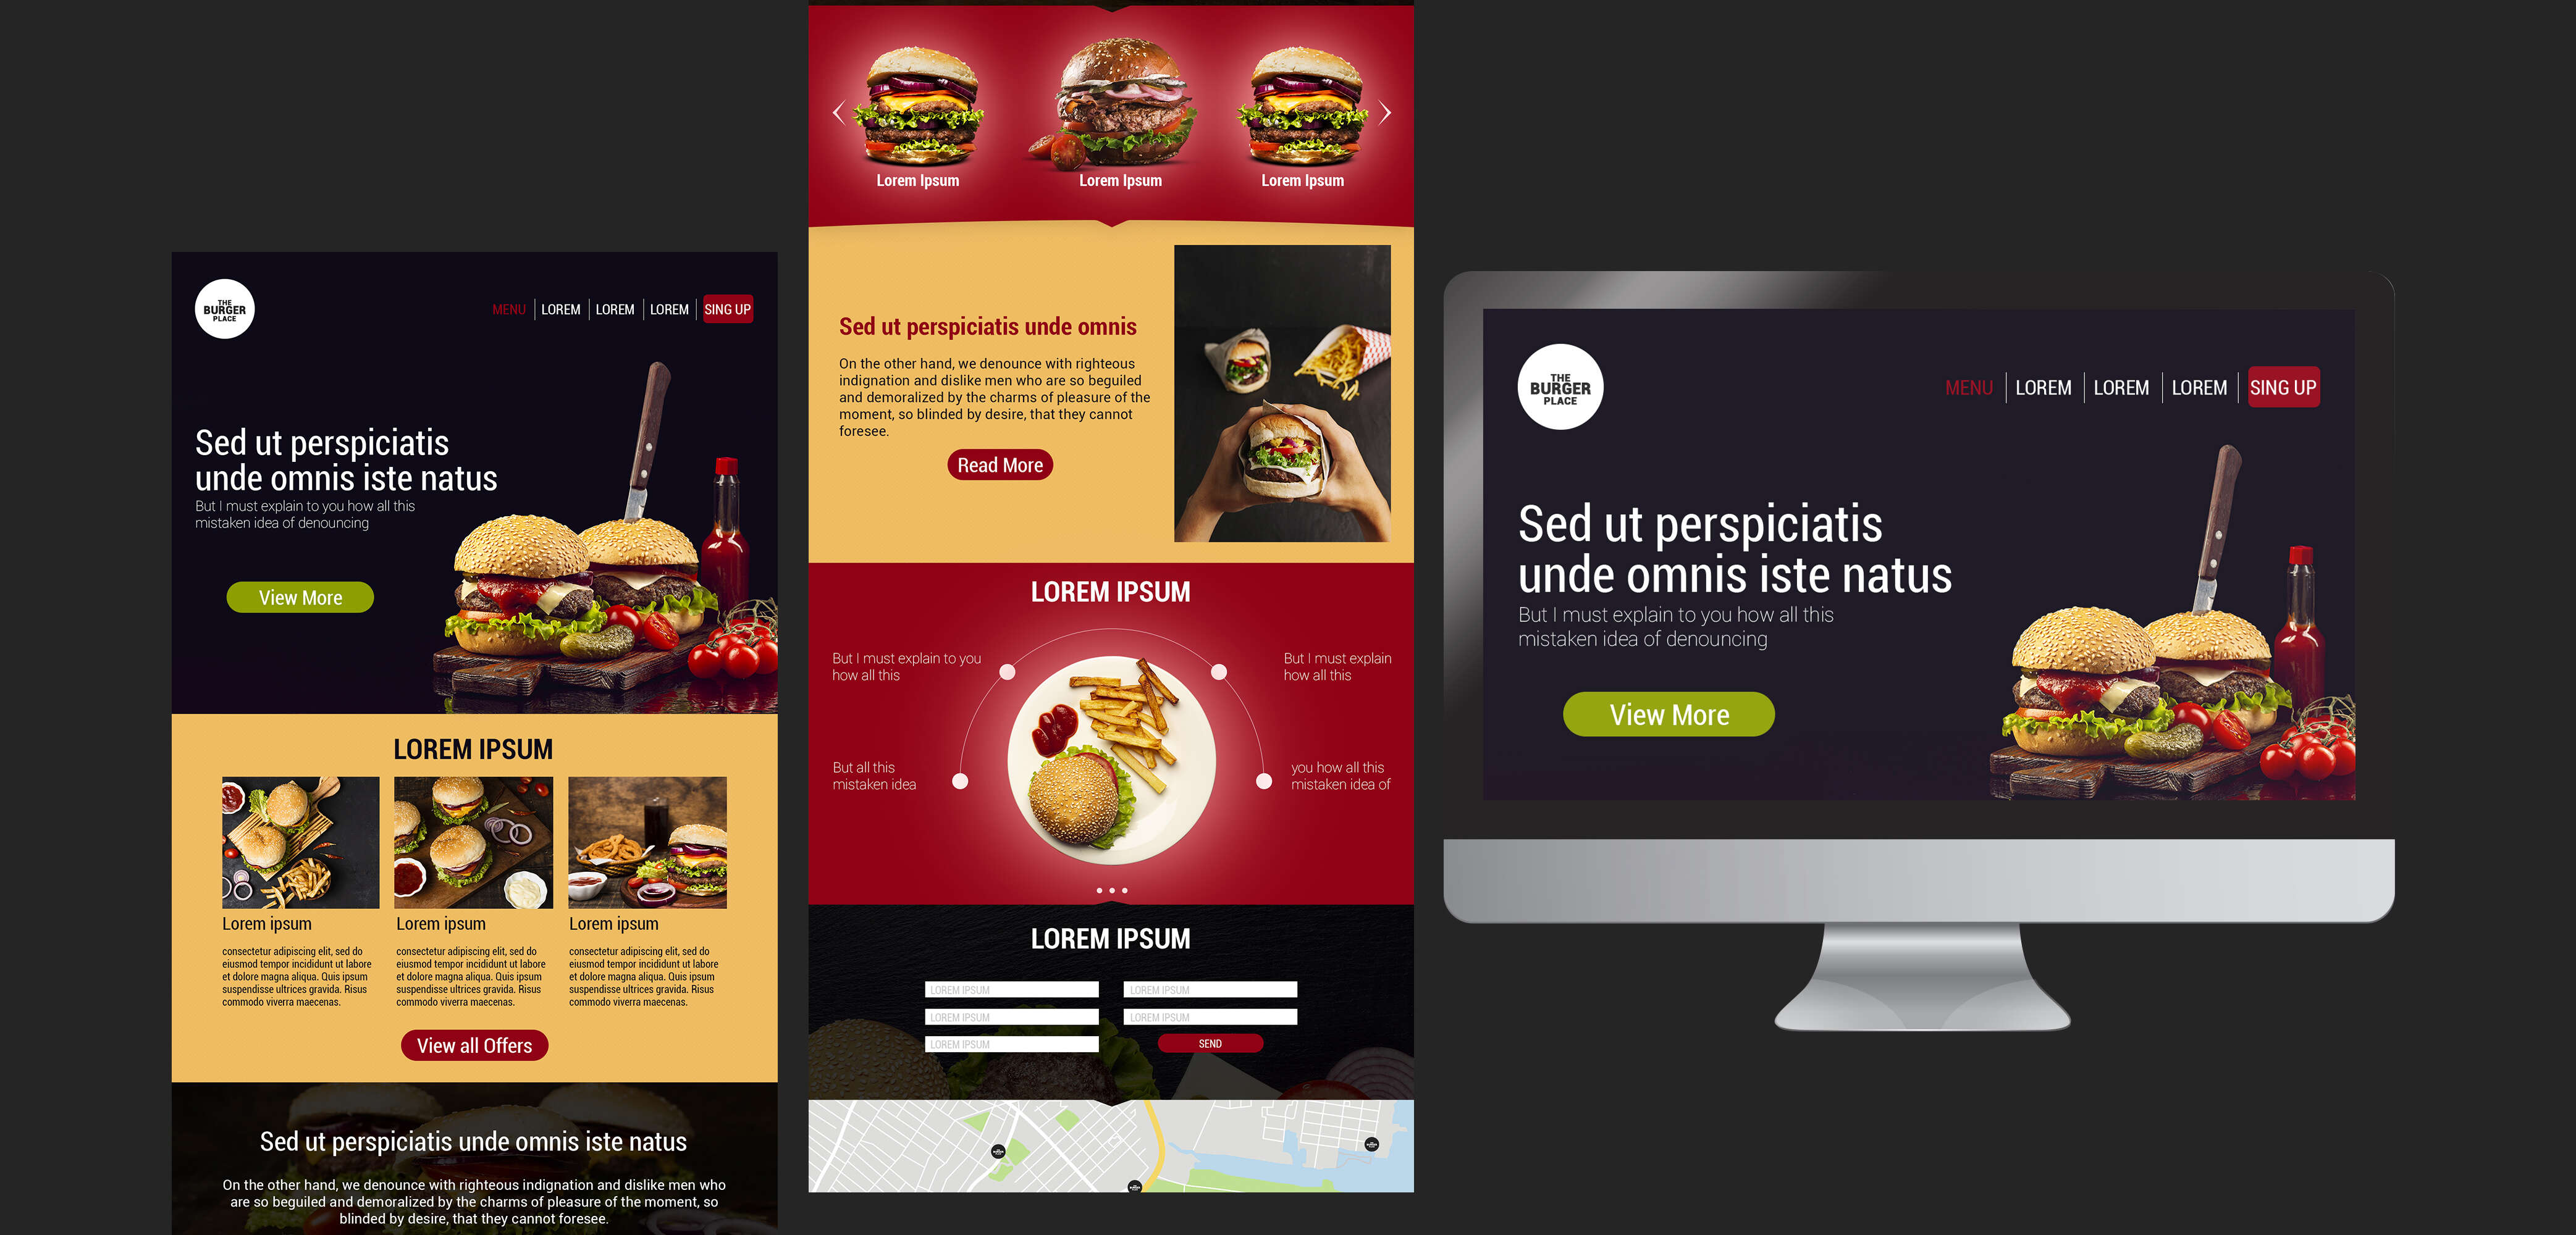 8 Key elements to create The Best Restaurant Website Design